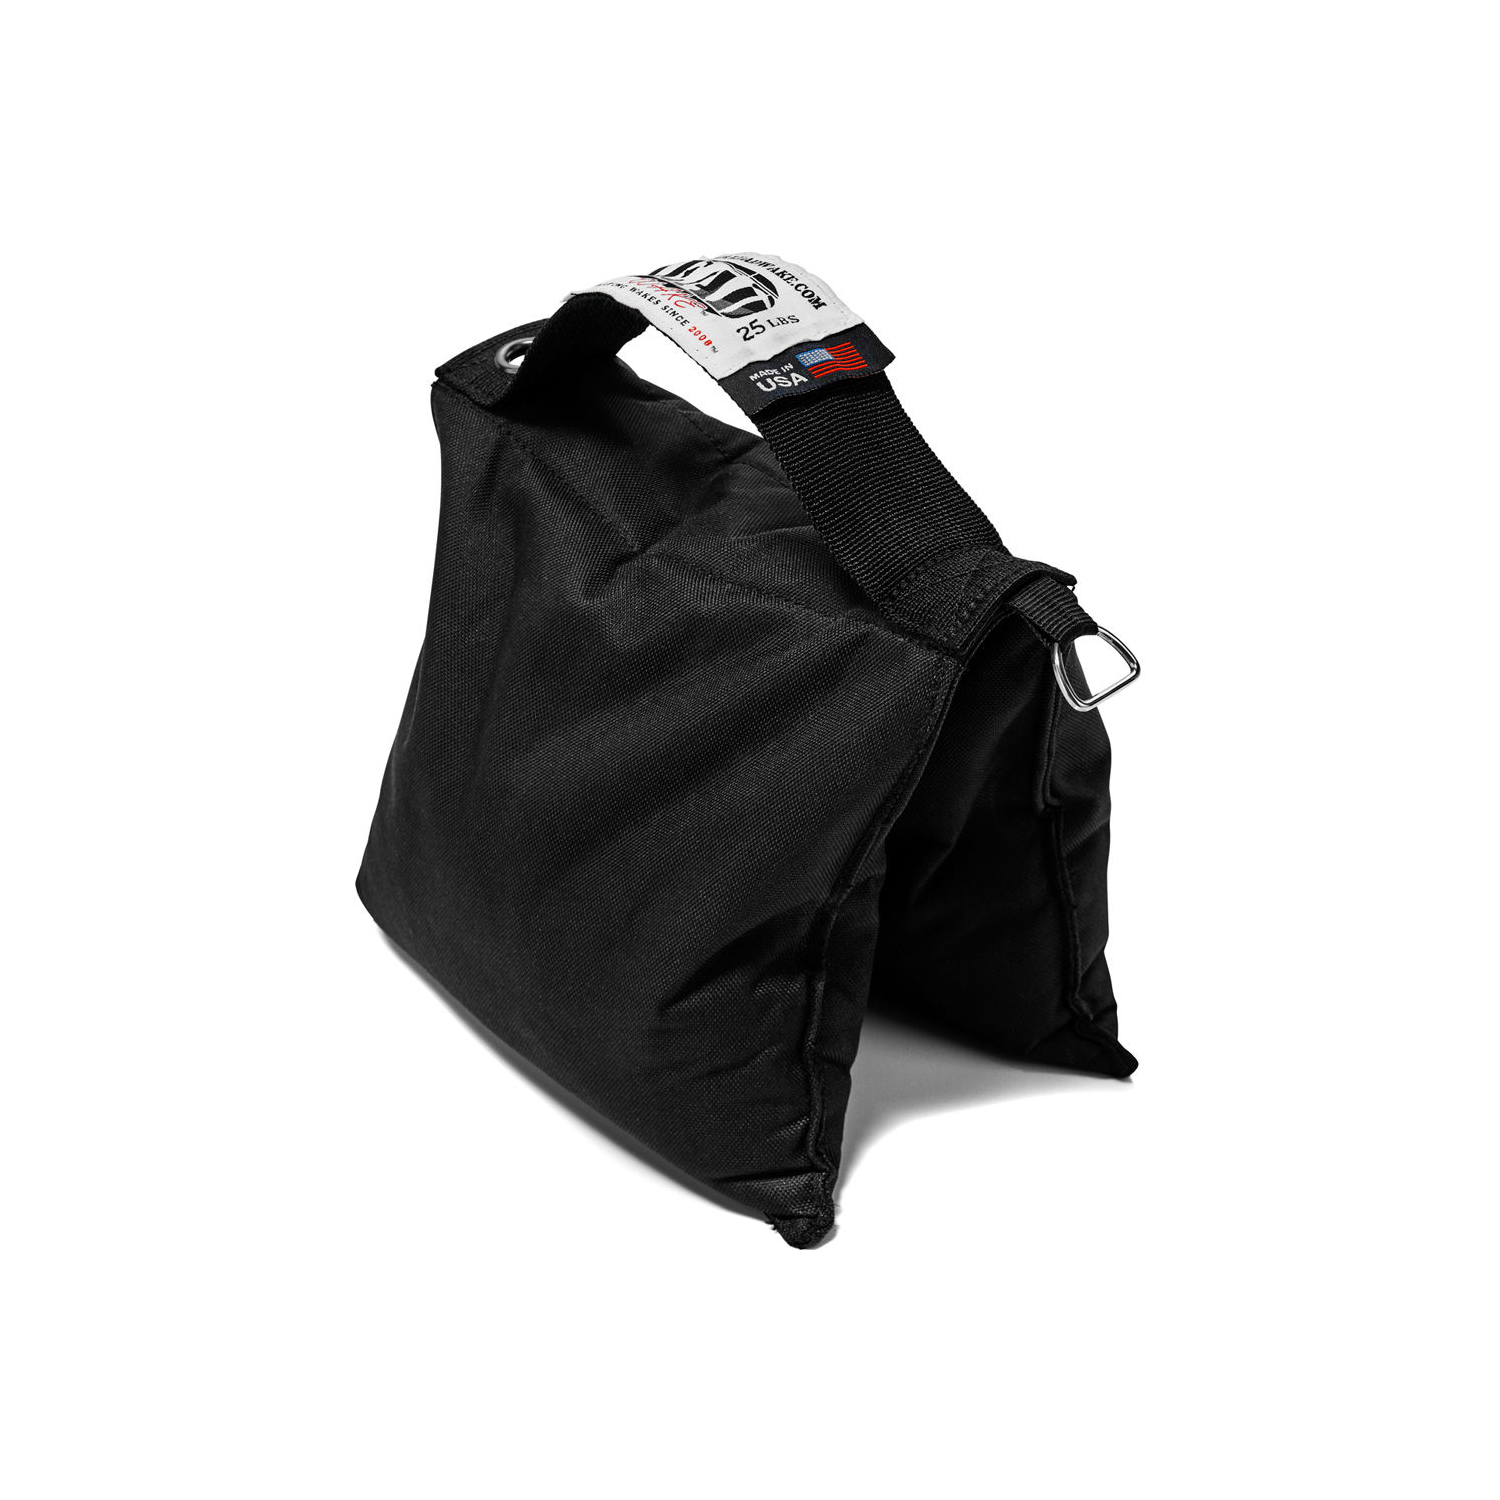 Inovativ Axis 25Lb Weight Bag